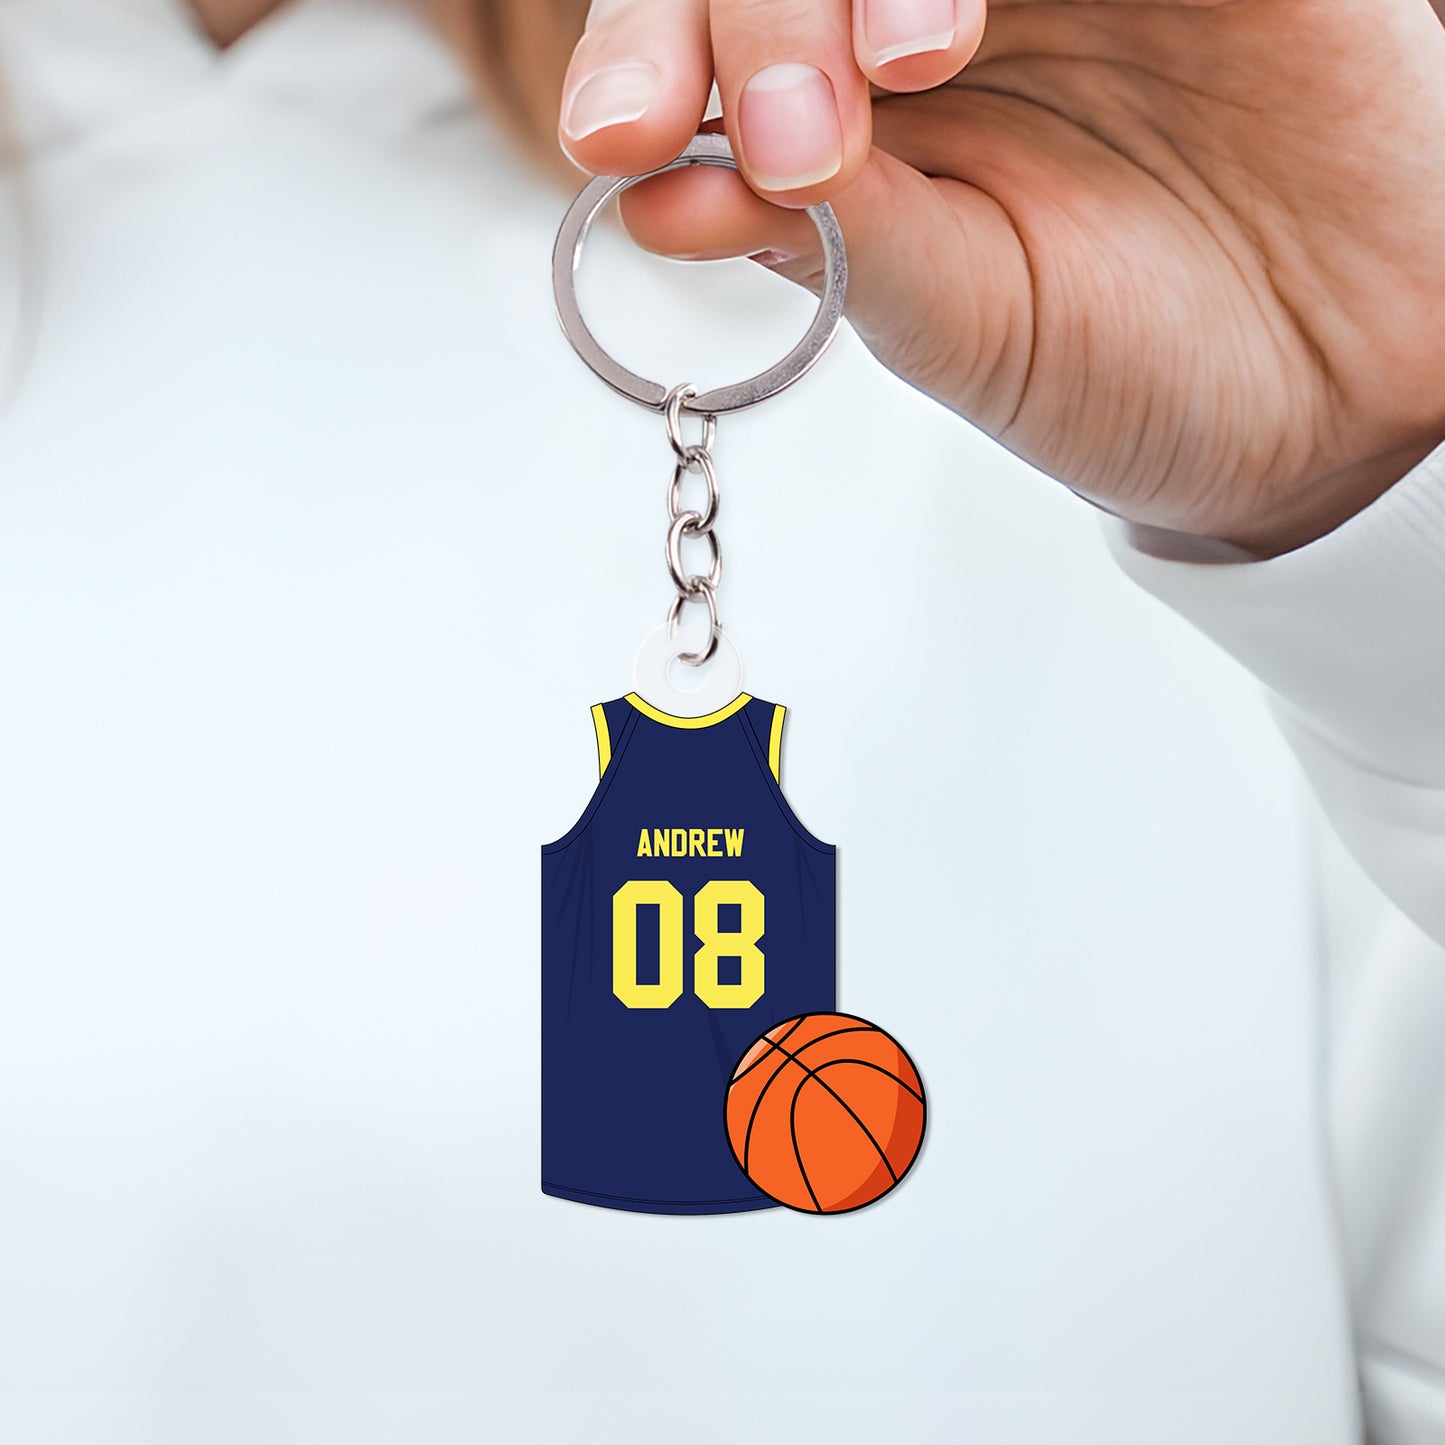 Family - Basketball Jersey - Personalized Acrylic Keychain